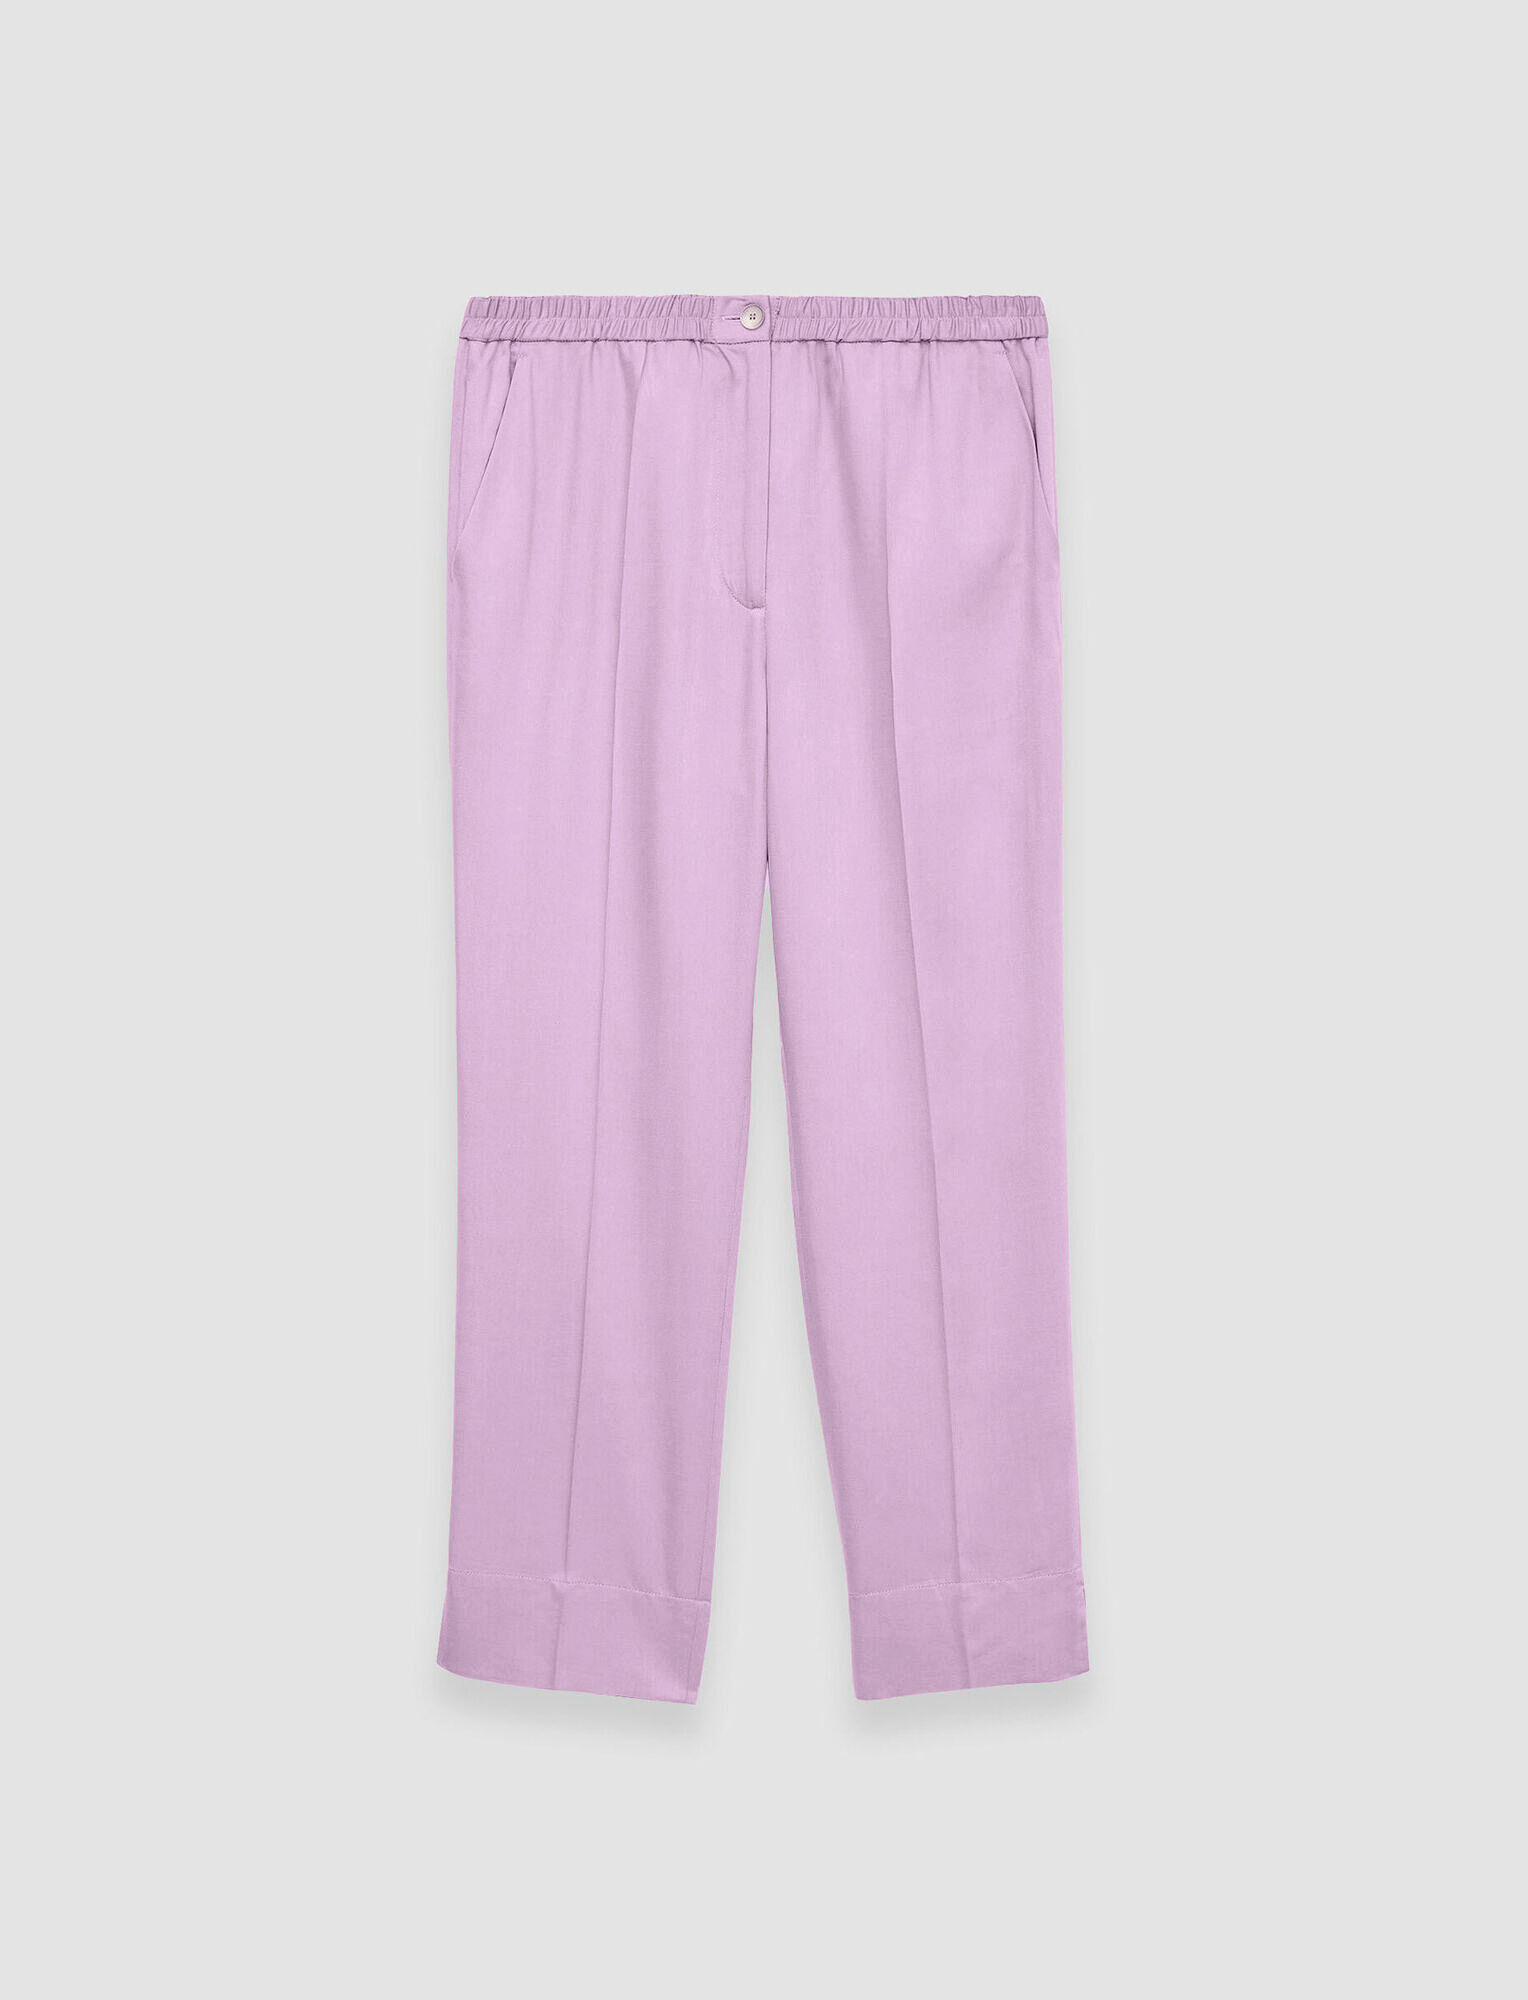 Joseph, Soft Viscose Tailoring Tottenham Trousers, in Begonia Pink